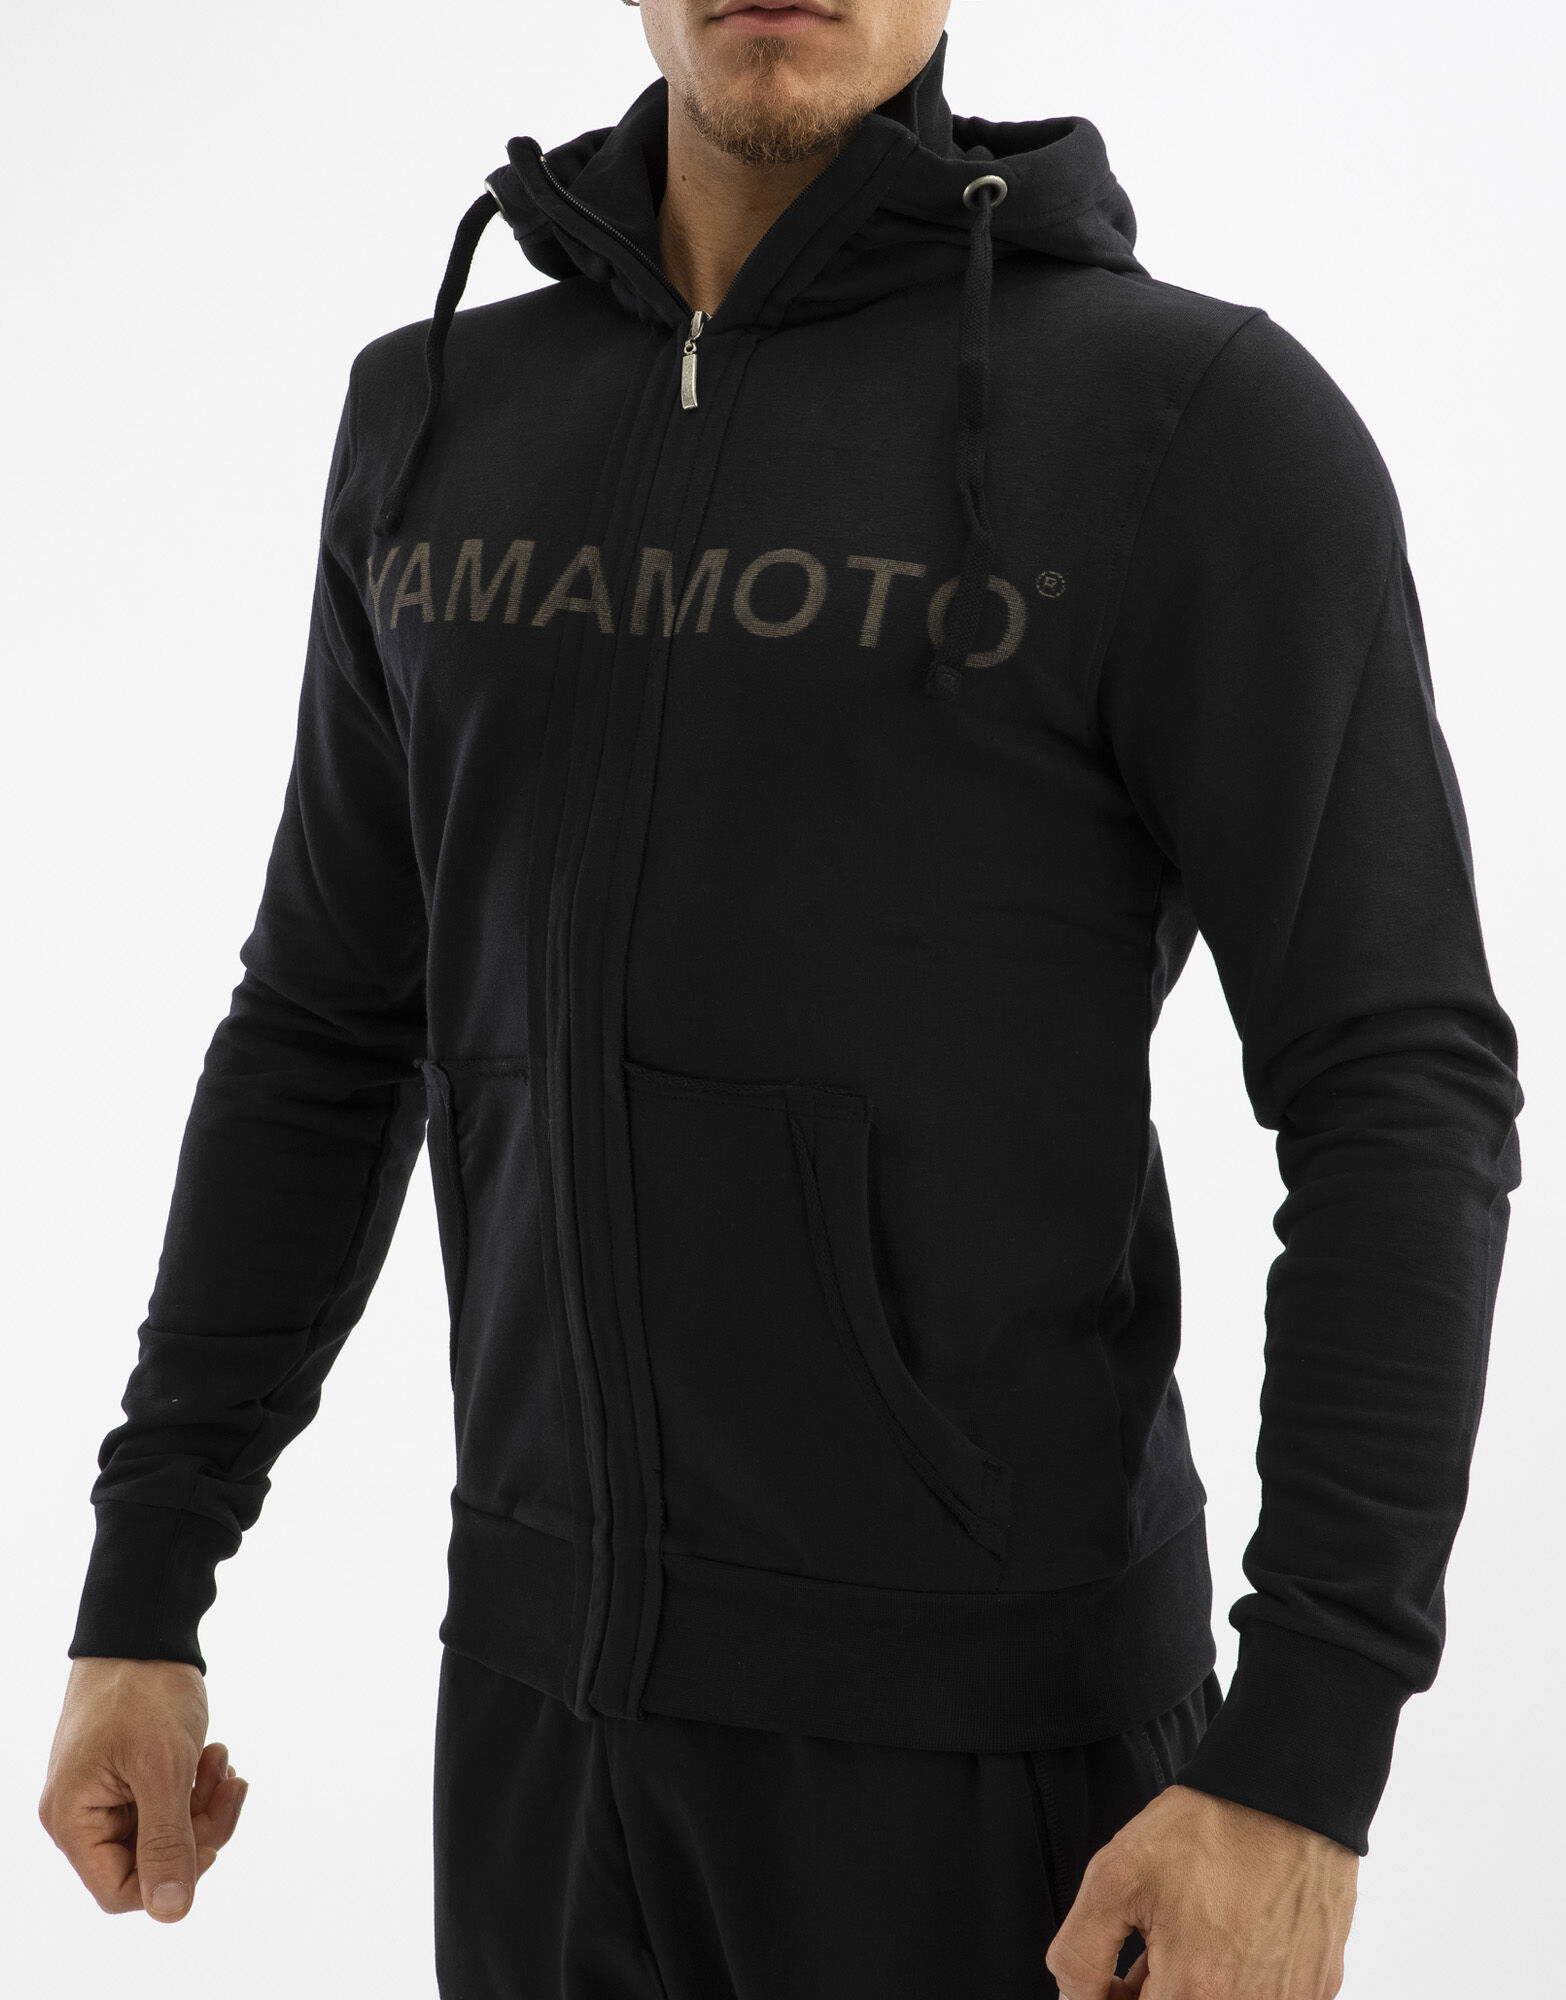 YAMAMOTO OUTFIT Sweatshirt Zip Nero S